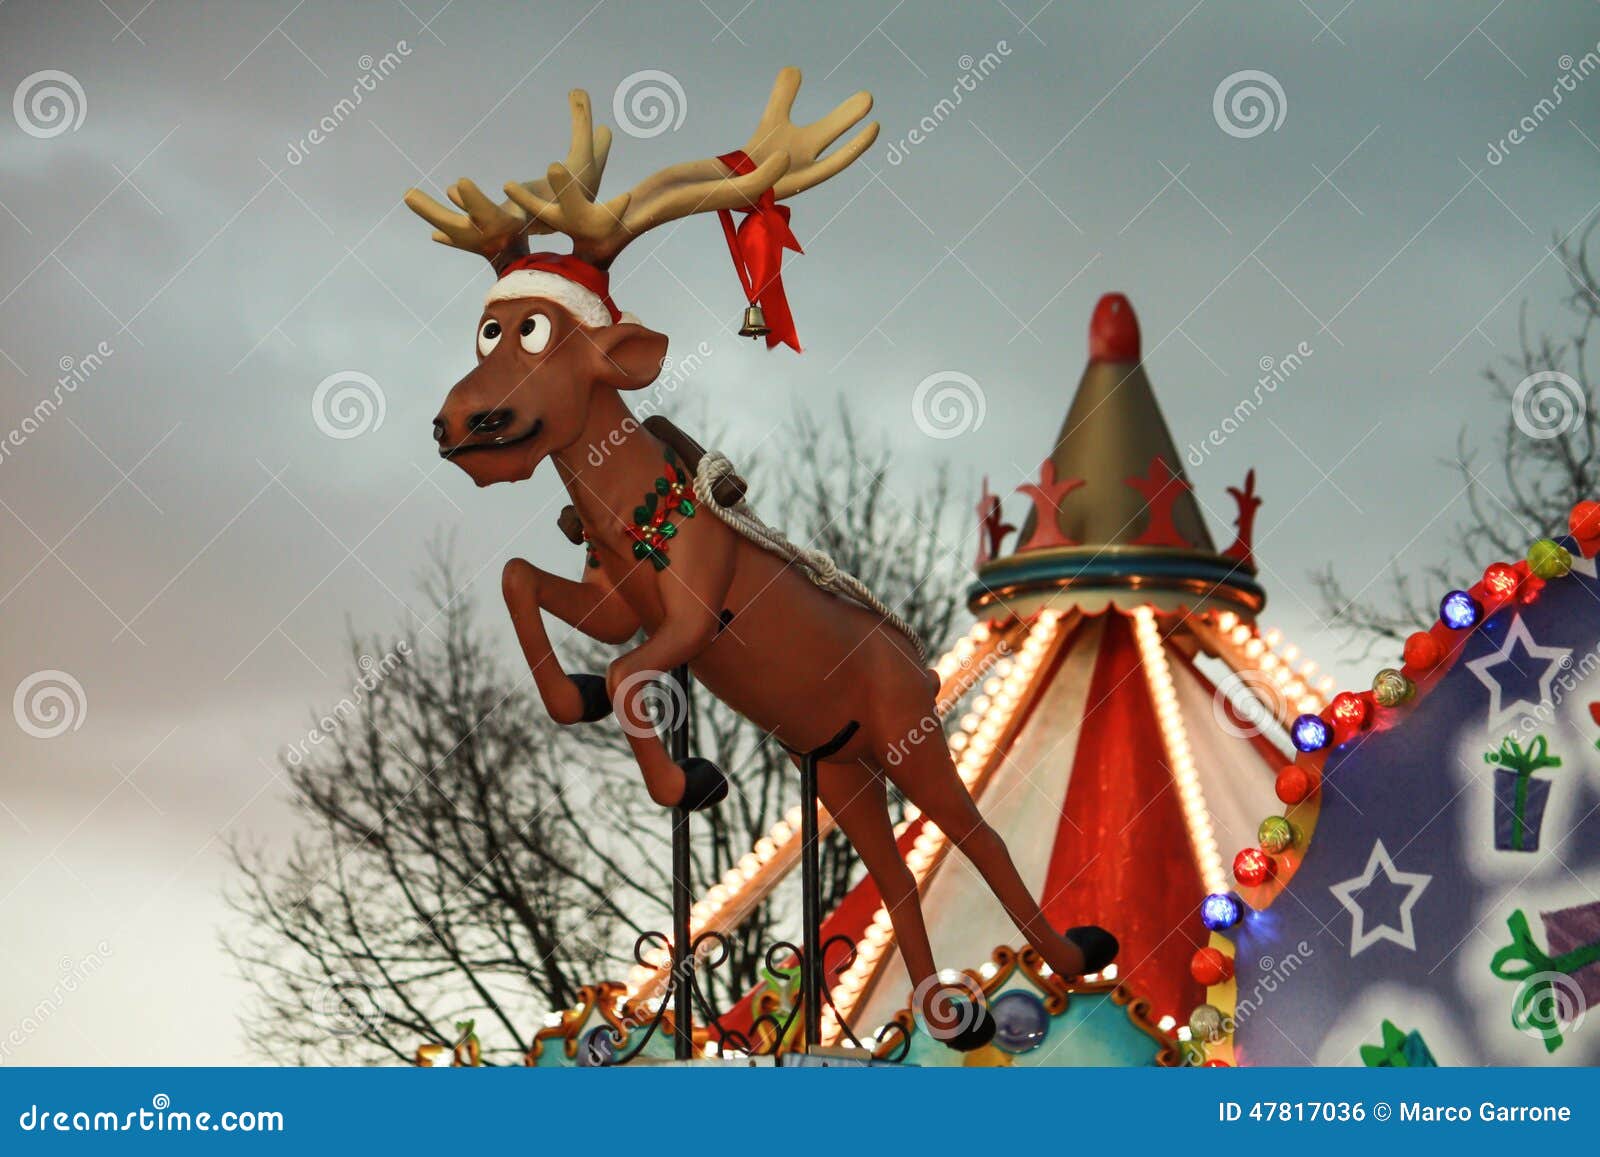 santa claus reindeer rudolph